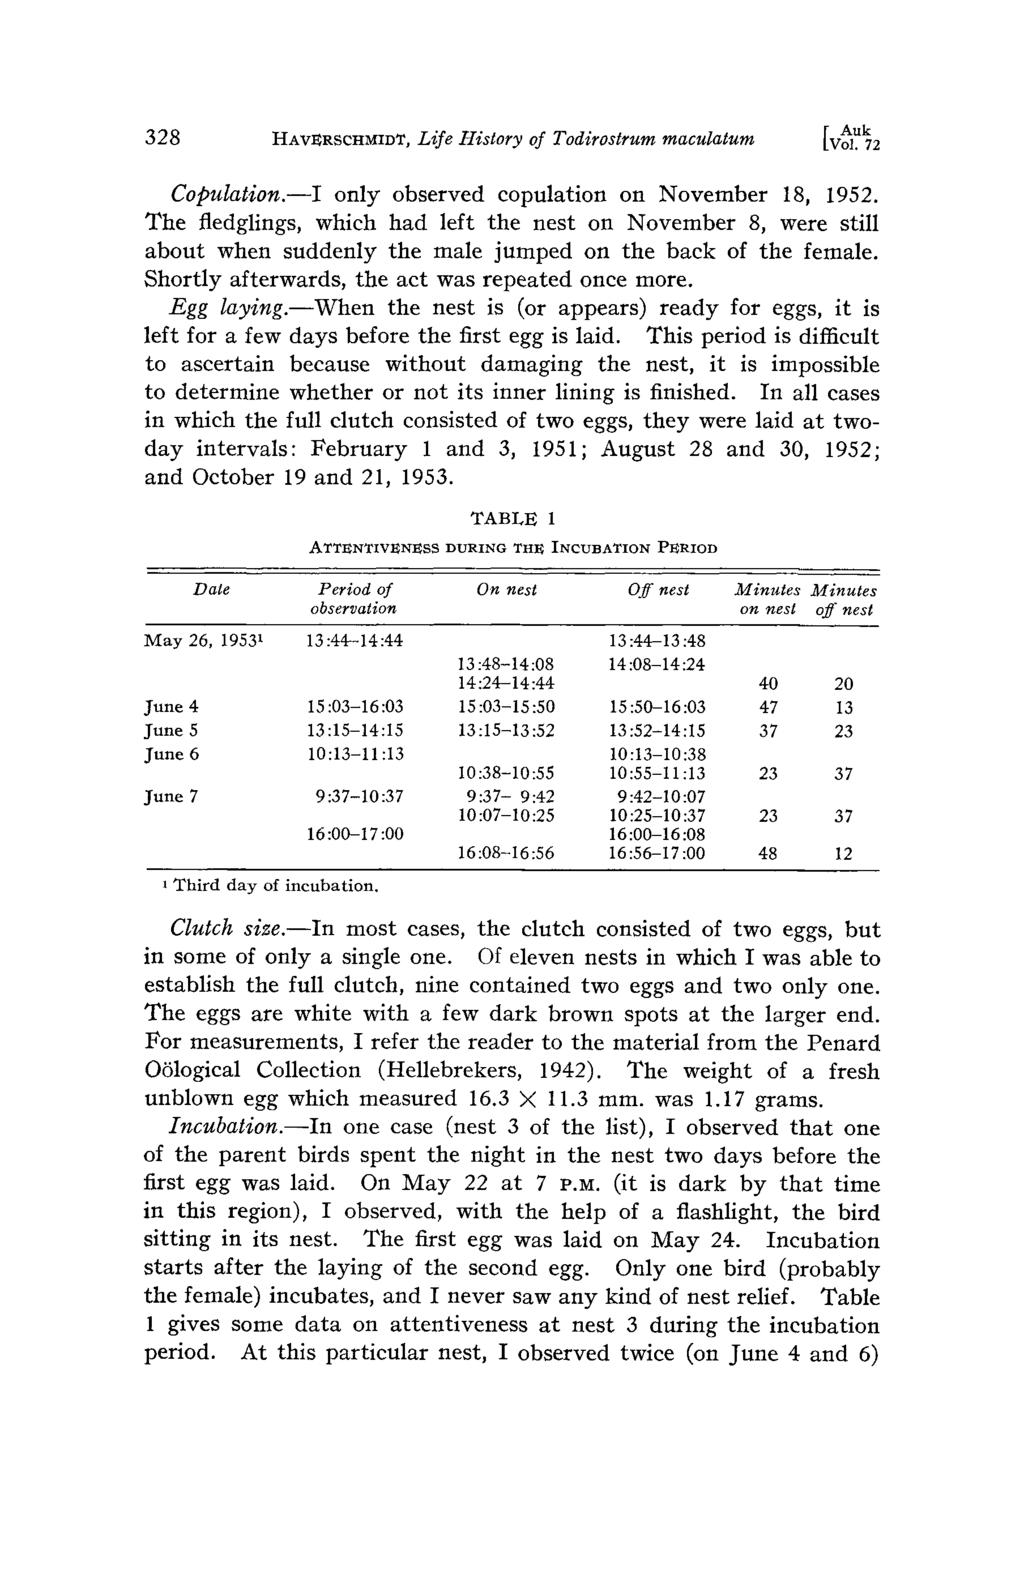 F Auk 328 HAV RSC X mt, Life History of Todirostrumaculatum tvol. 72 Copulation.--I only observed copulation on November 18, 1952.